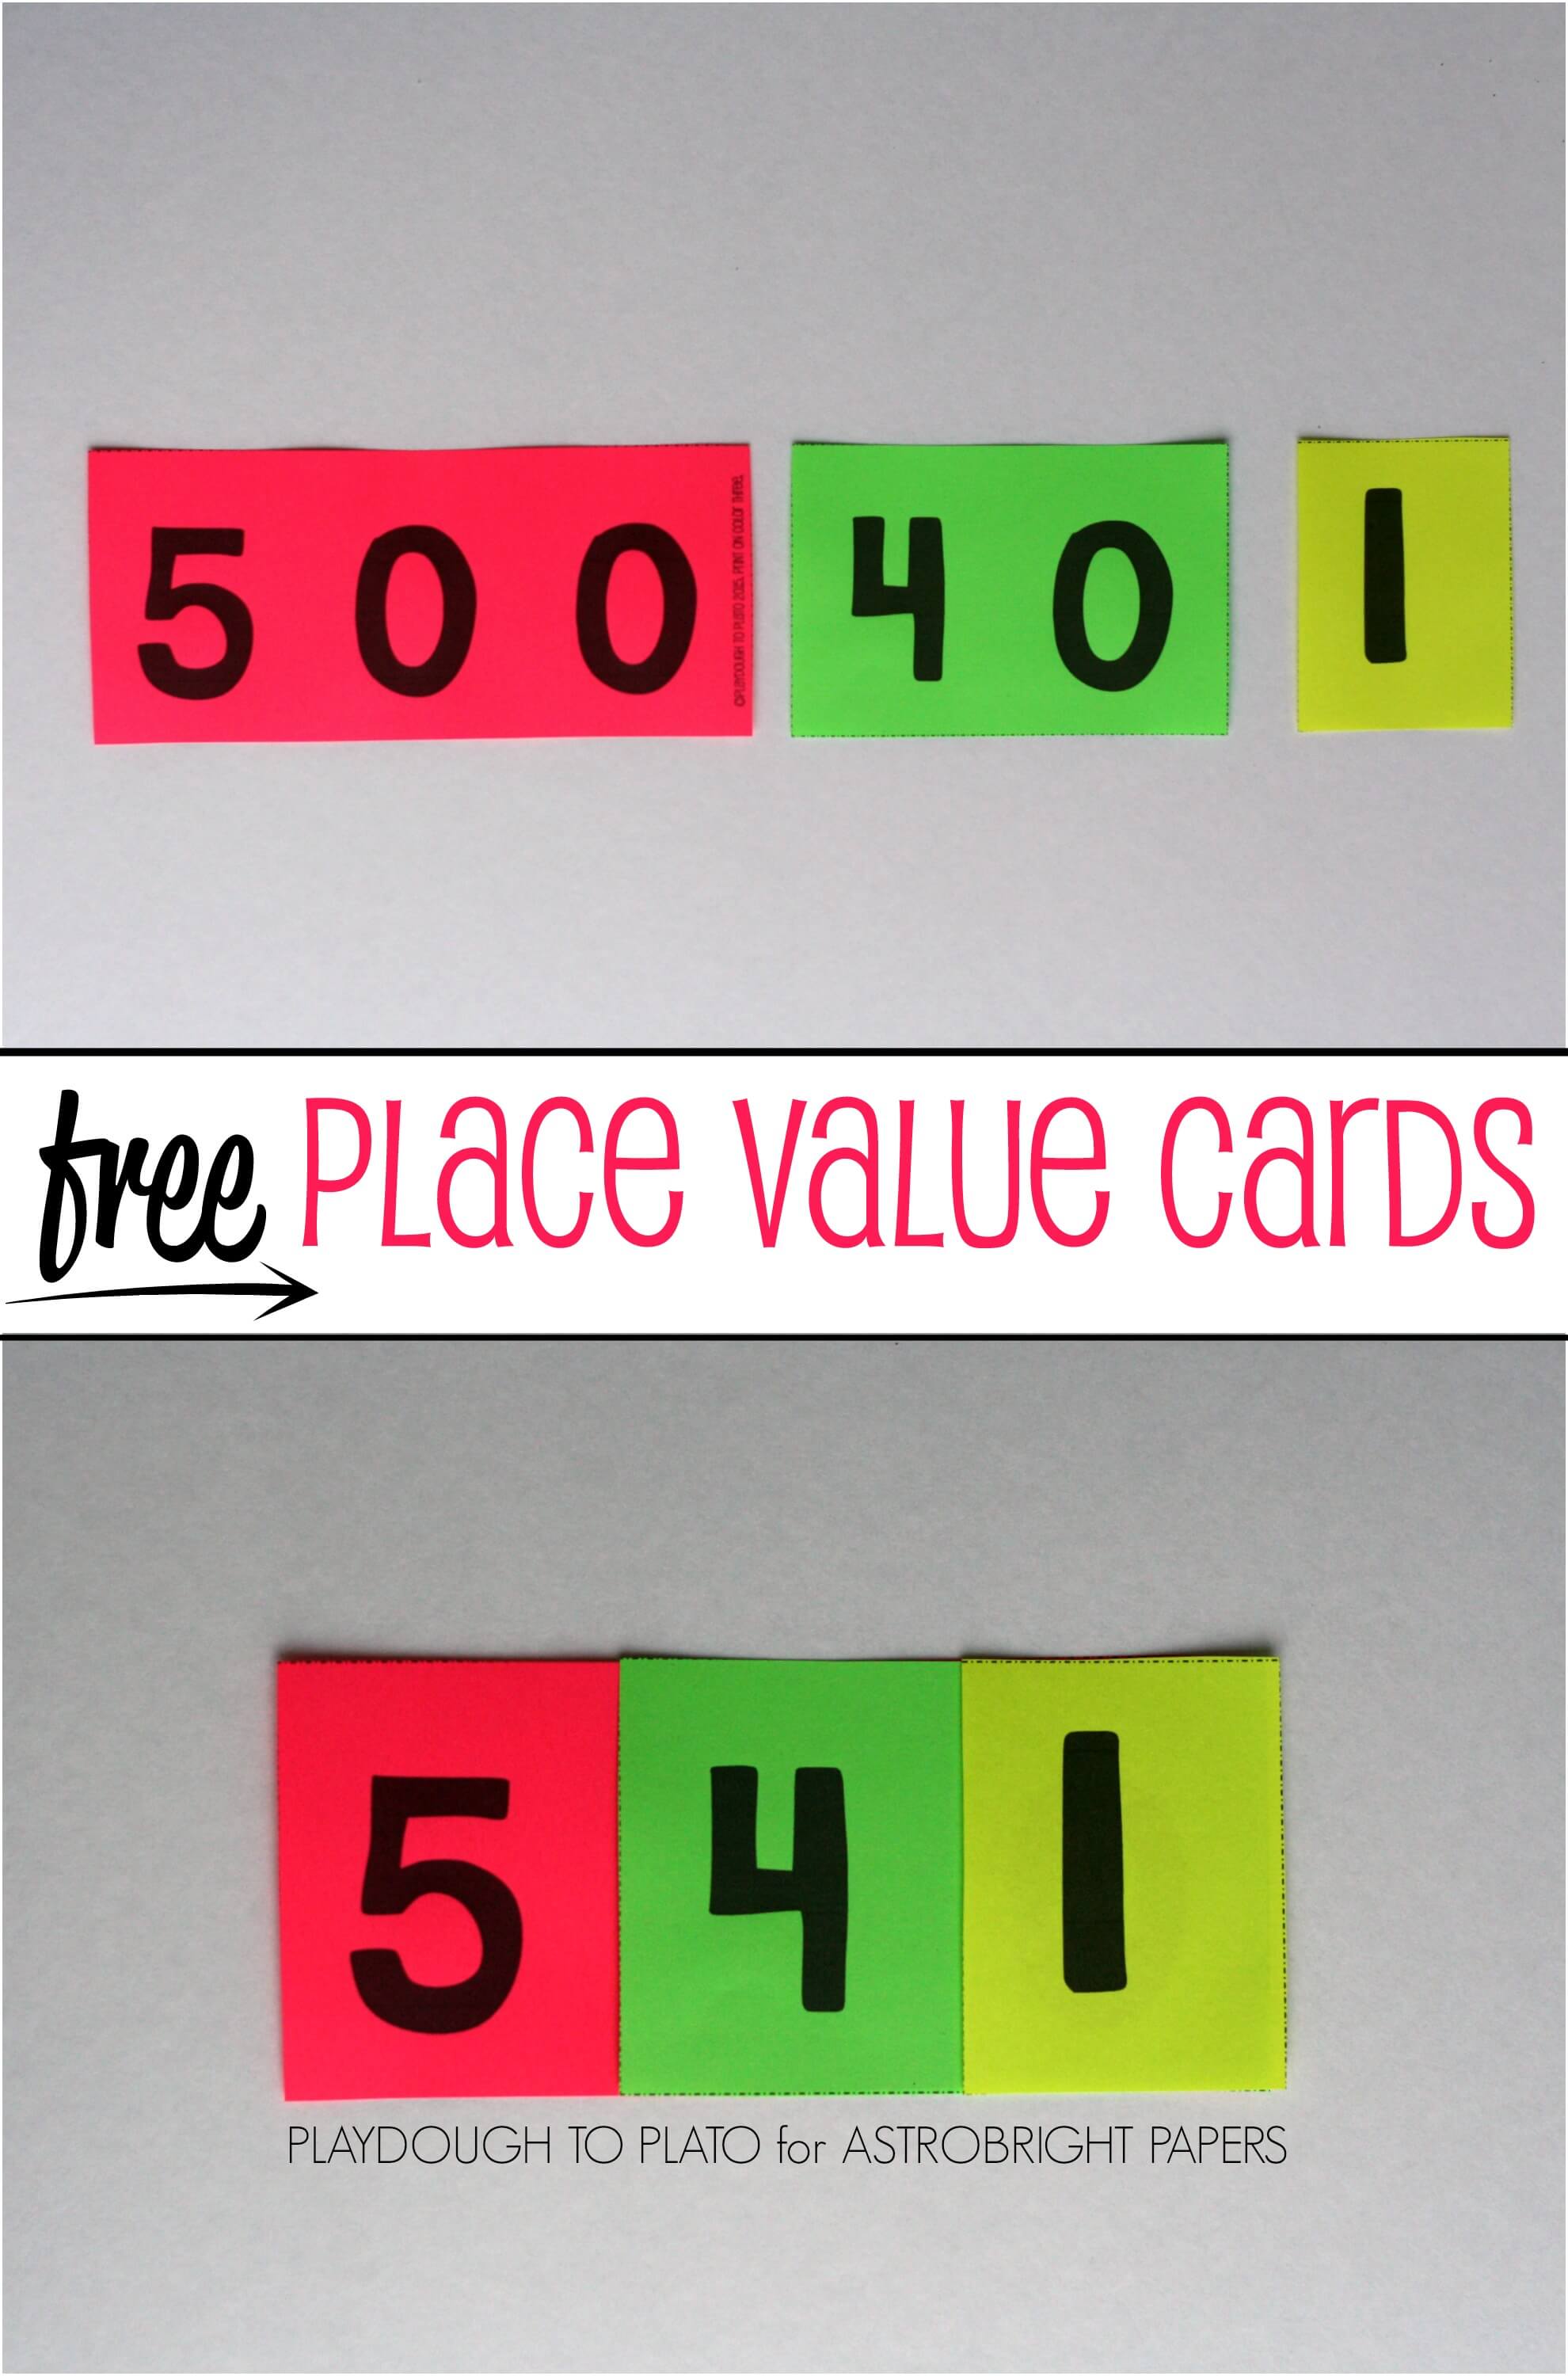 Place Value Cards Colorize Playdough To Plato